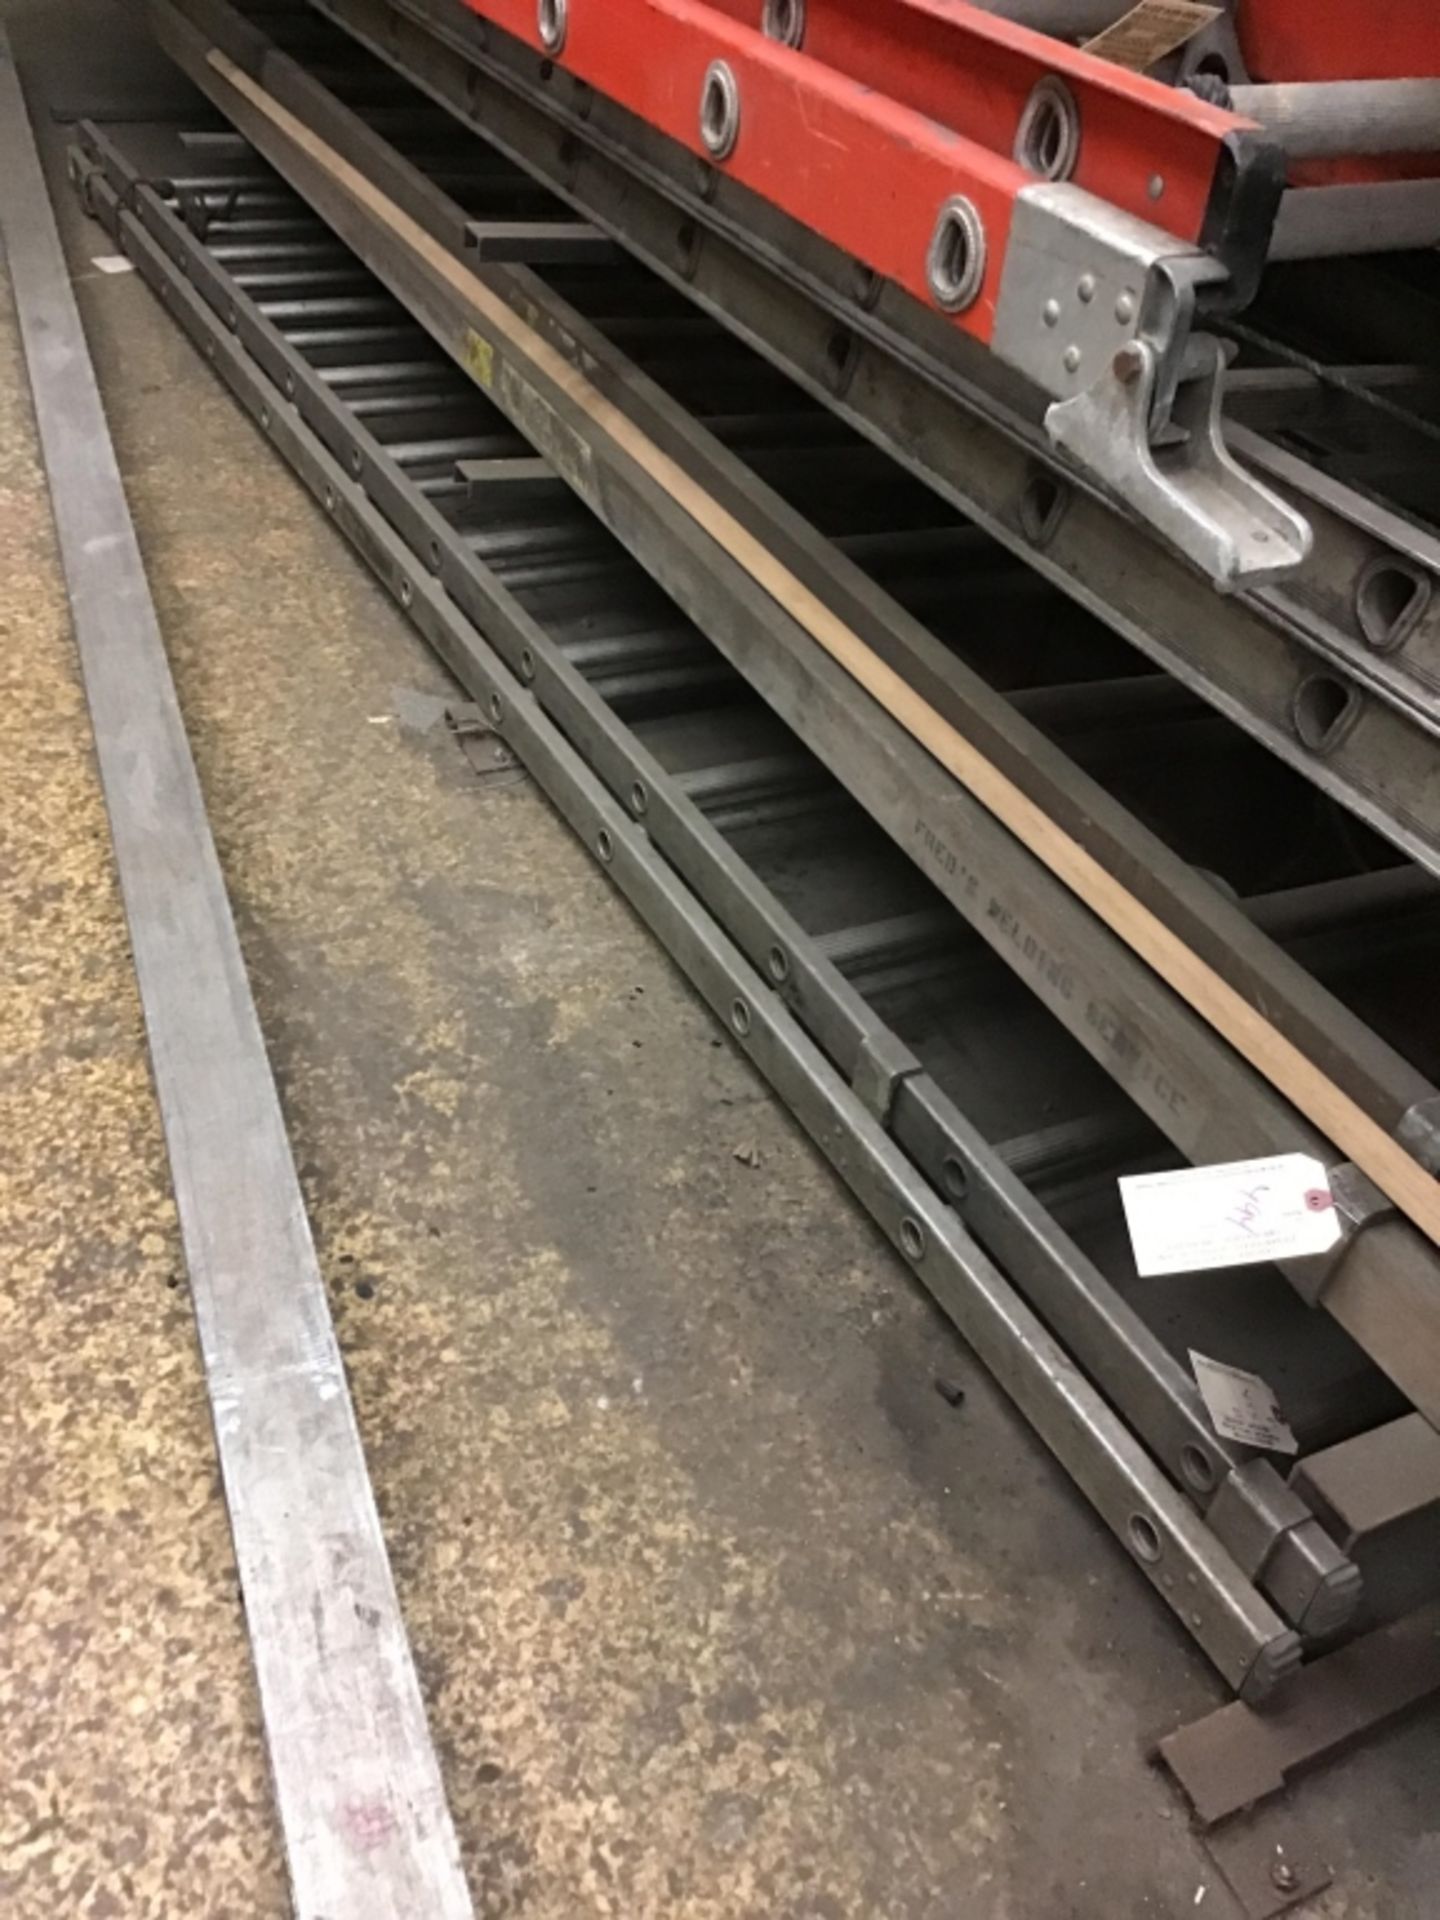 Aluminum extension ladder on floor